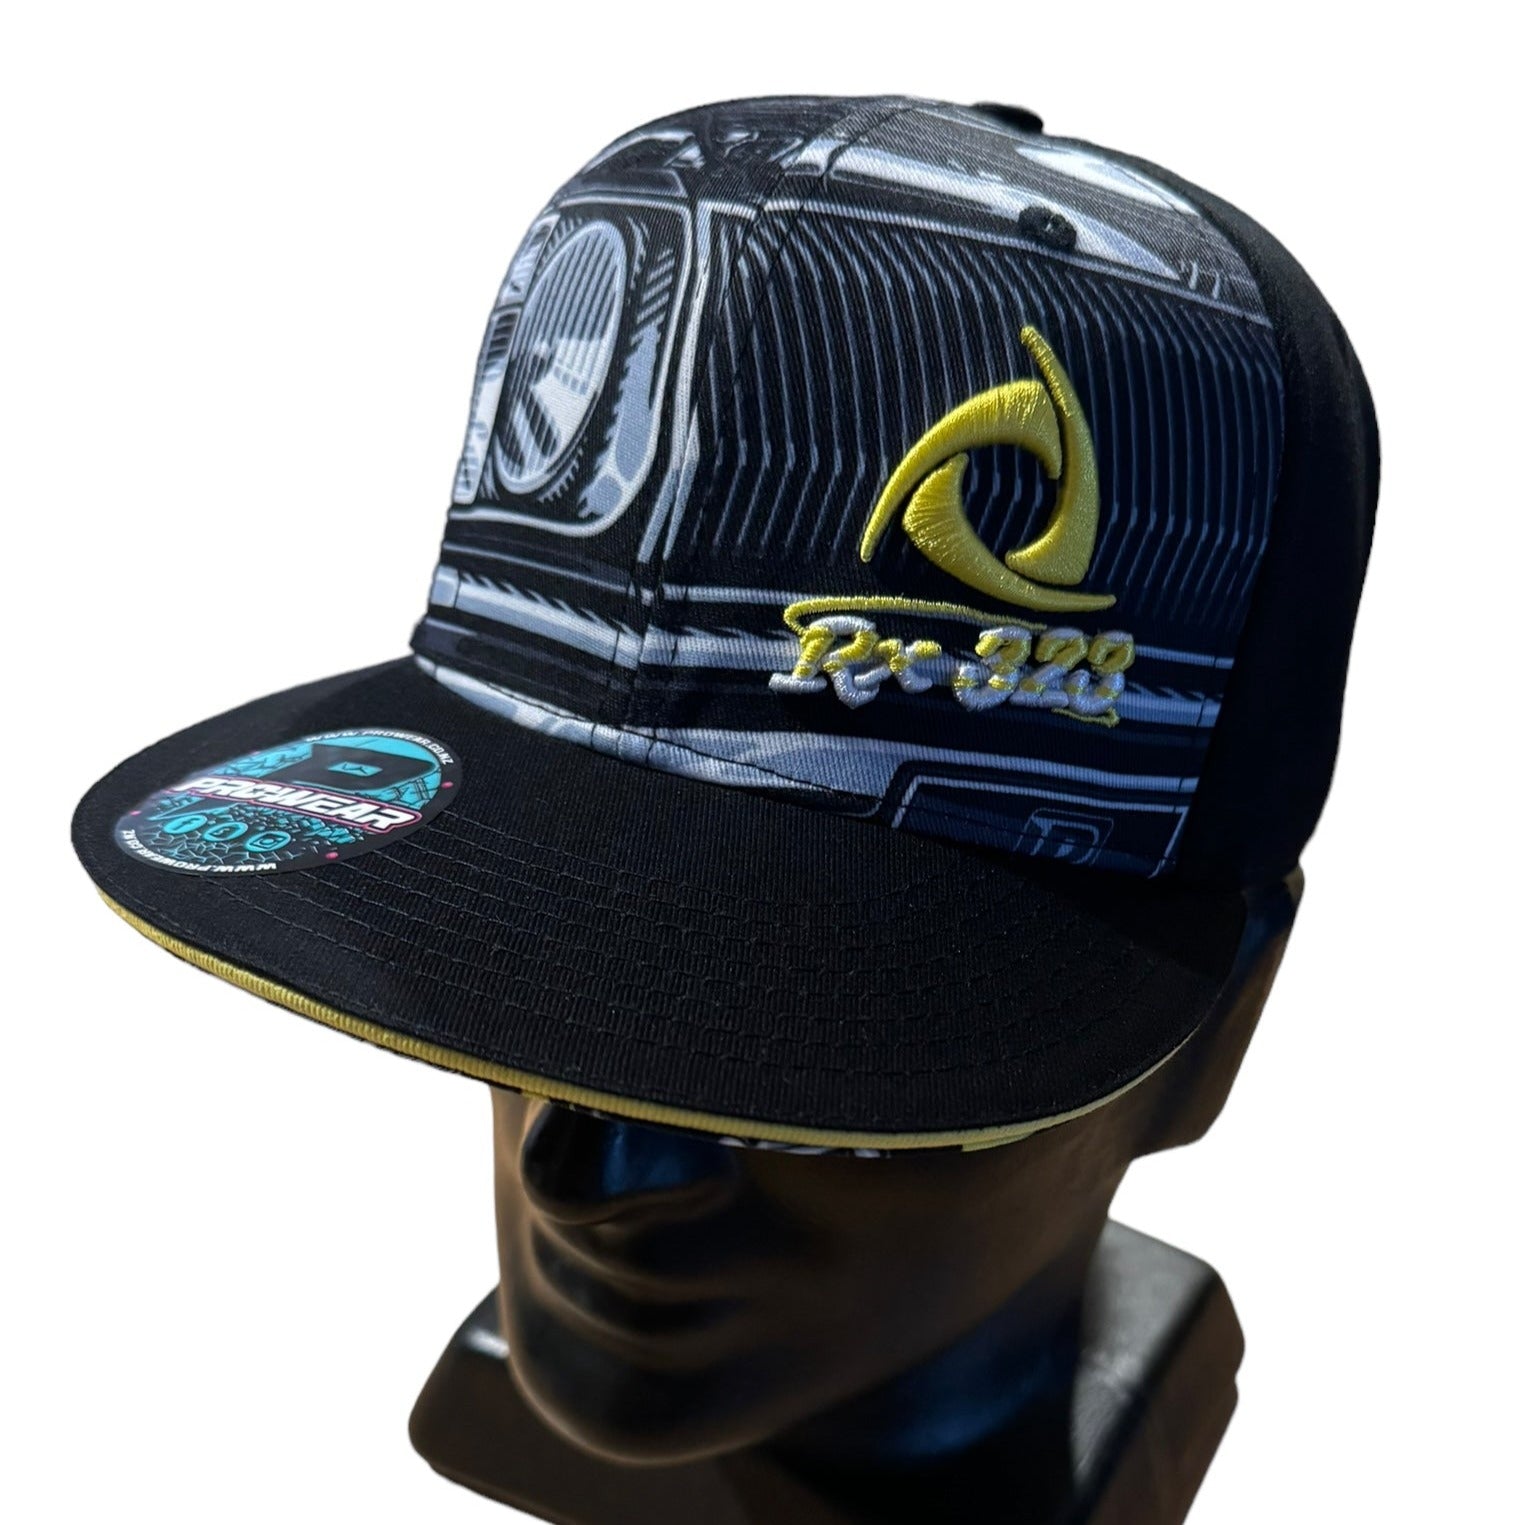 RX323 PAC Hat